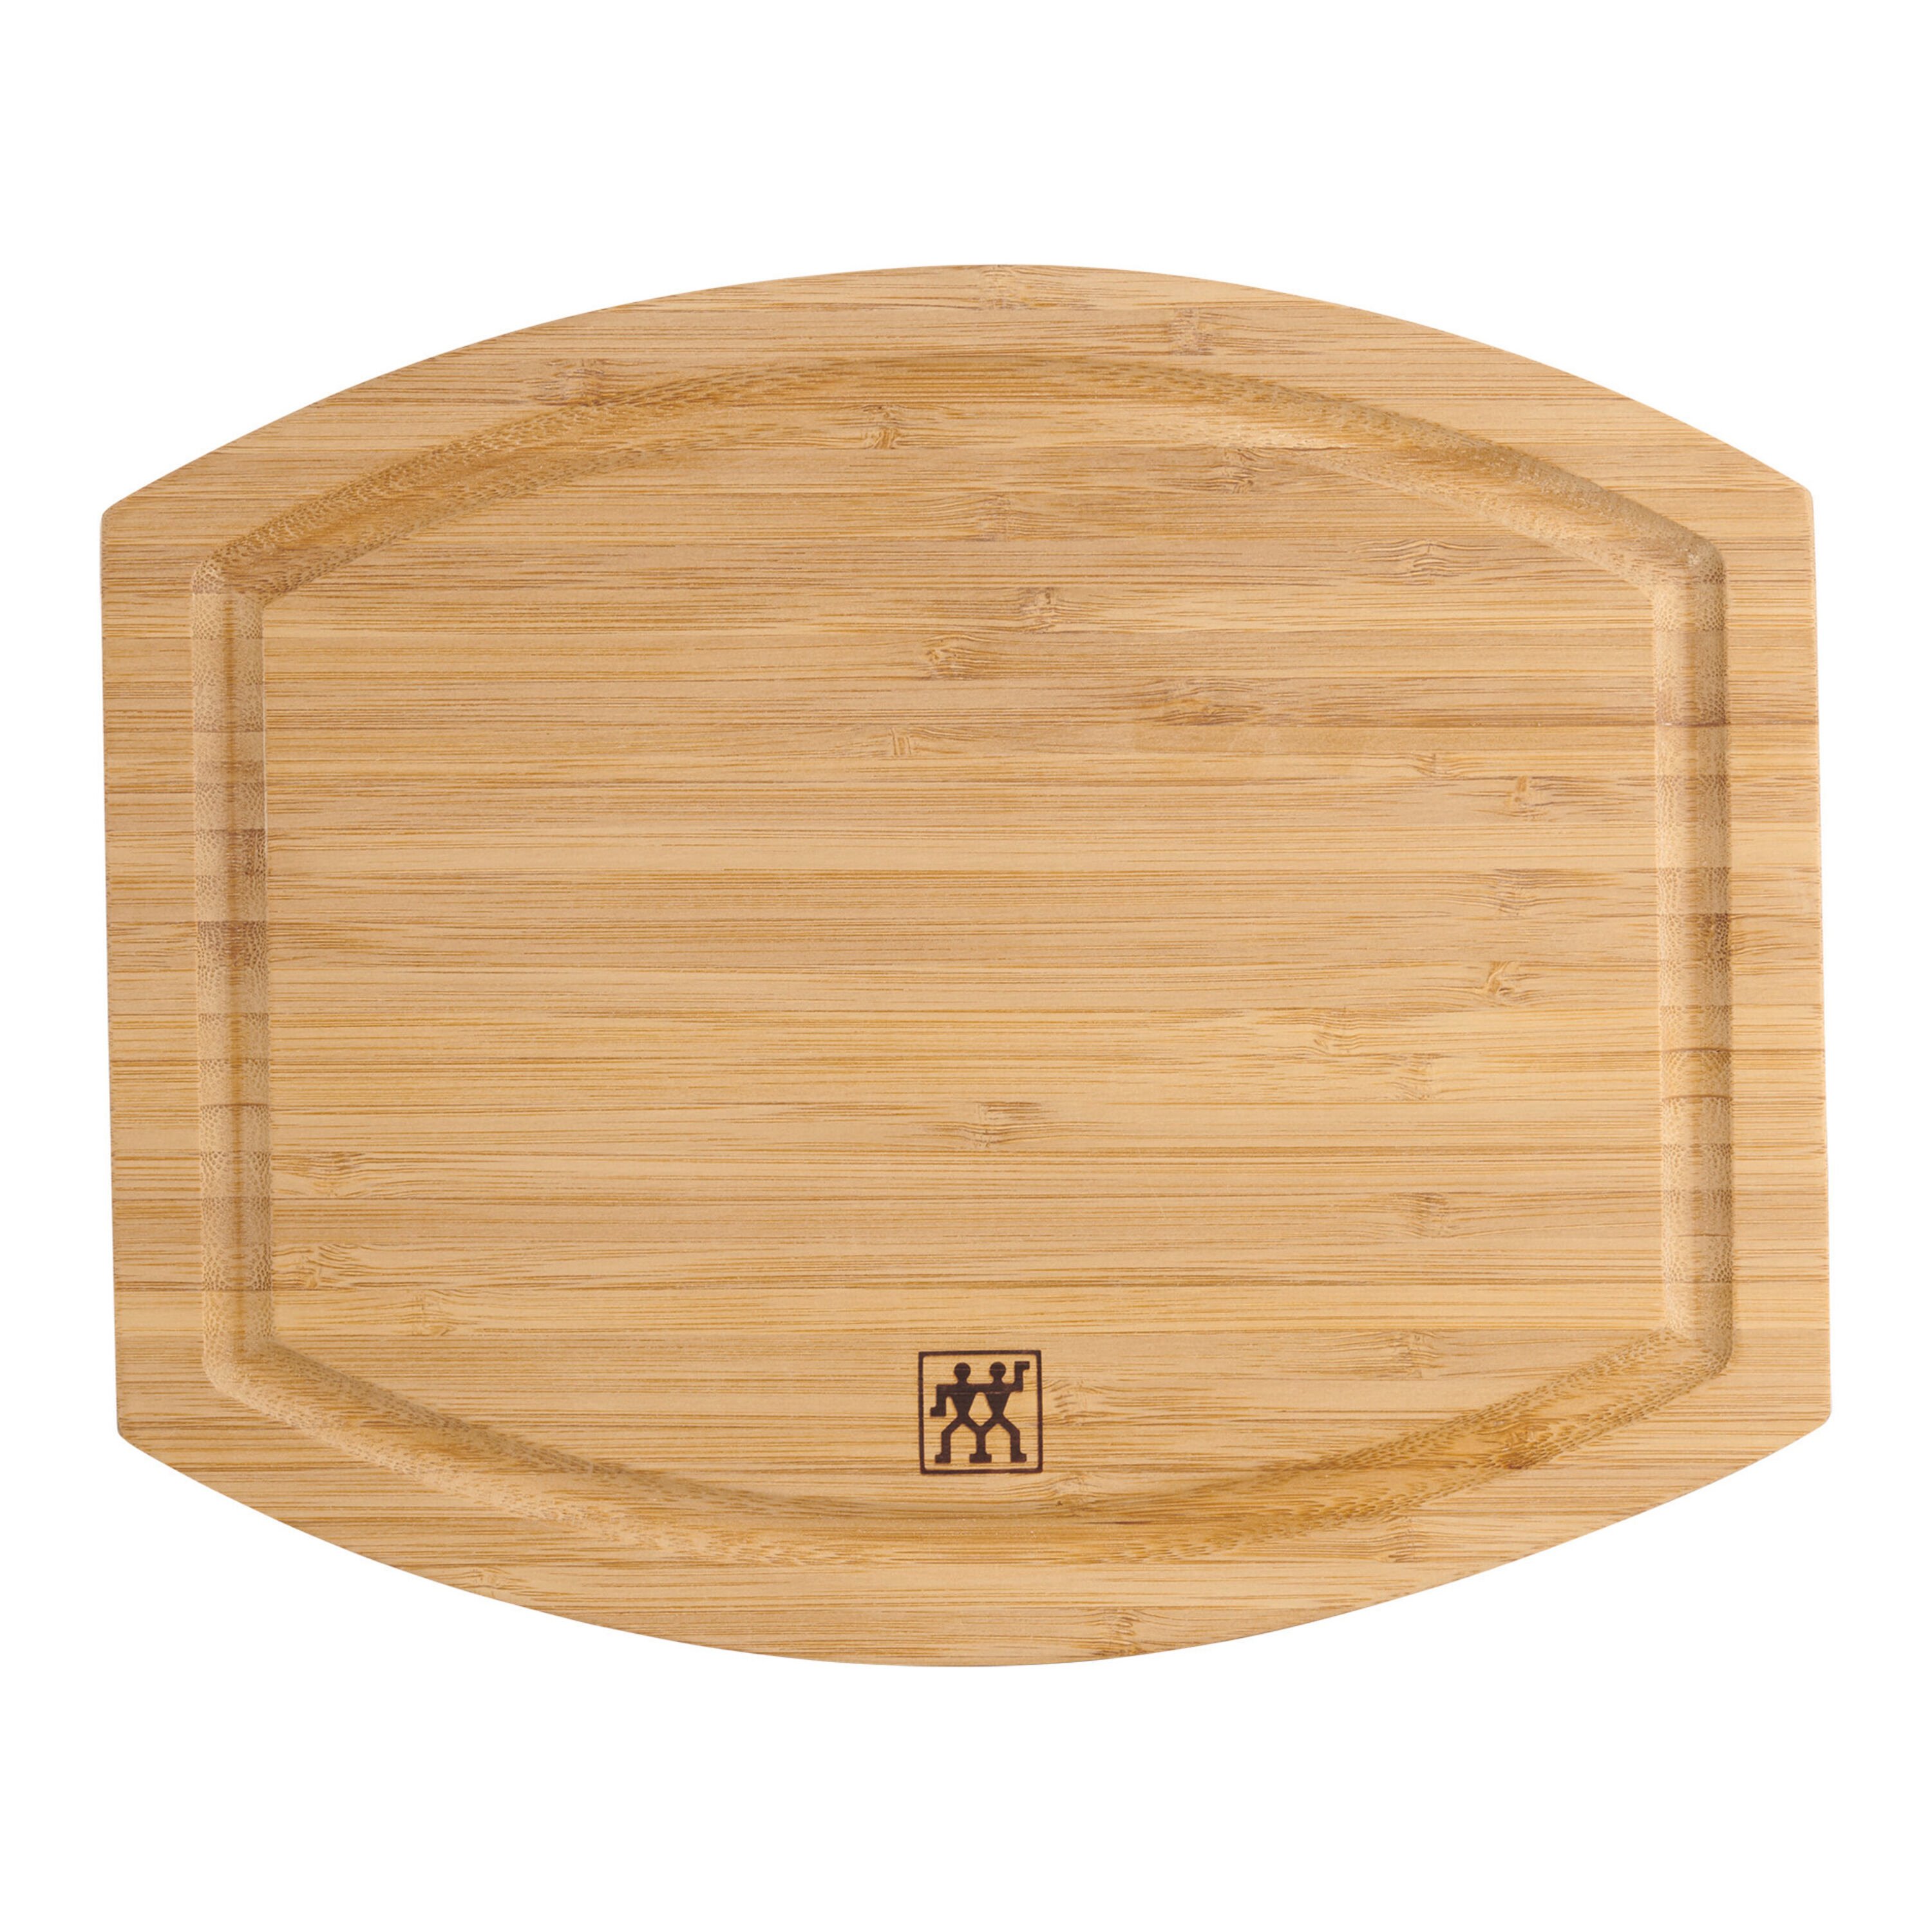 Zwilling Cutting board cherry wood - 35x25 cm- ZW35123-300